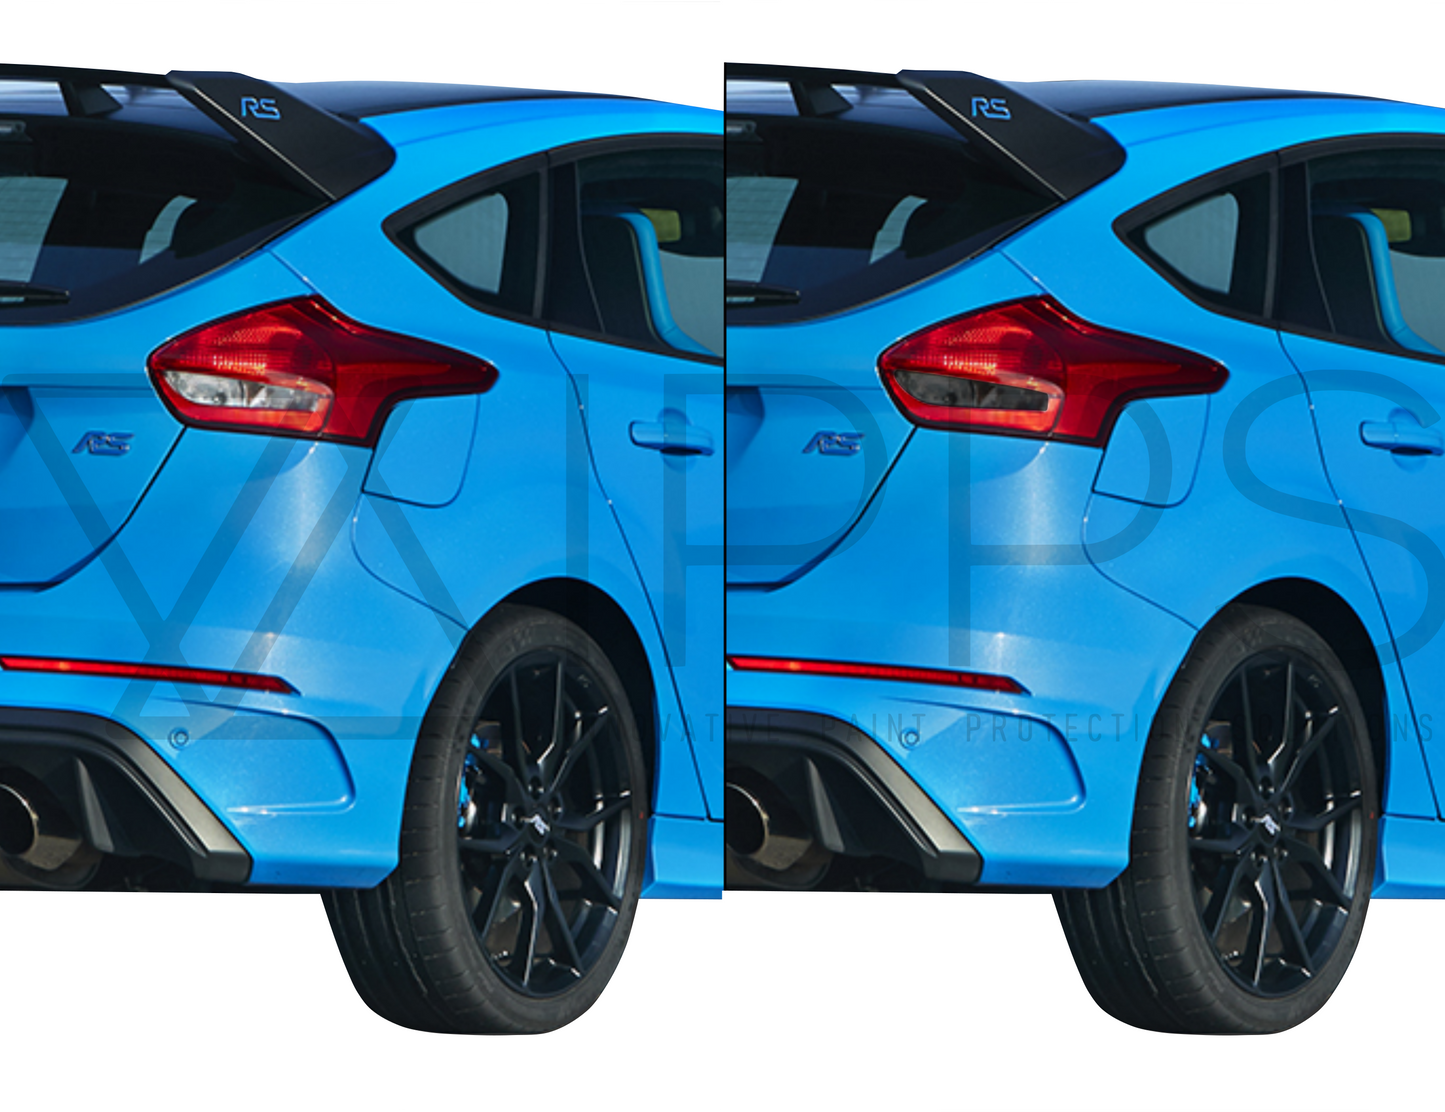 Ford Focus Rear Reverse Light Tint Overlays (MK3 | MK3.5)